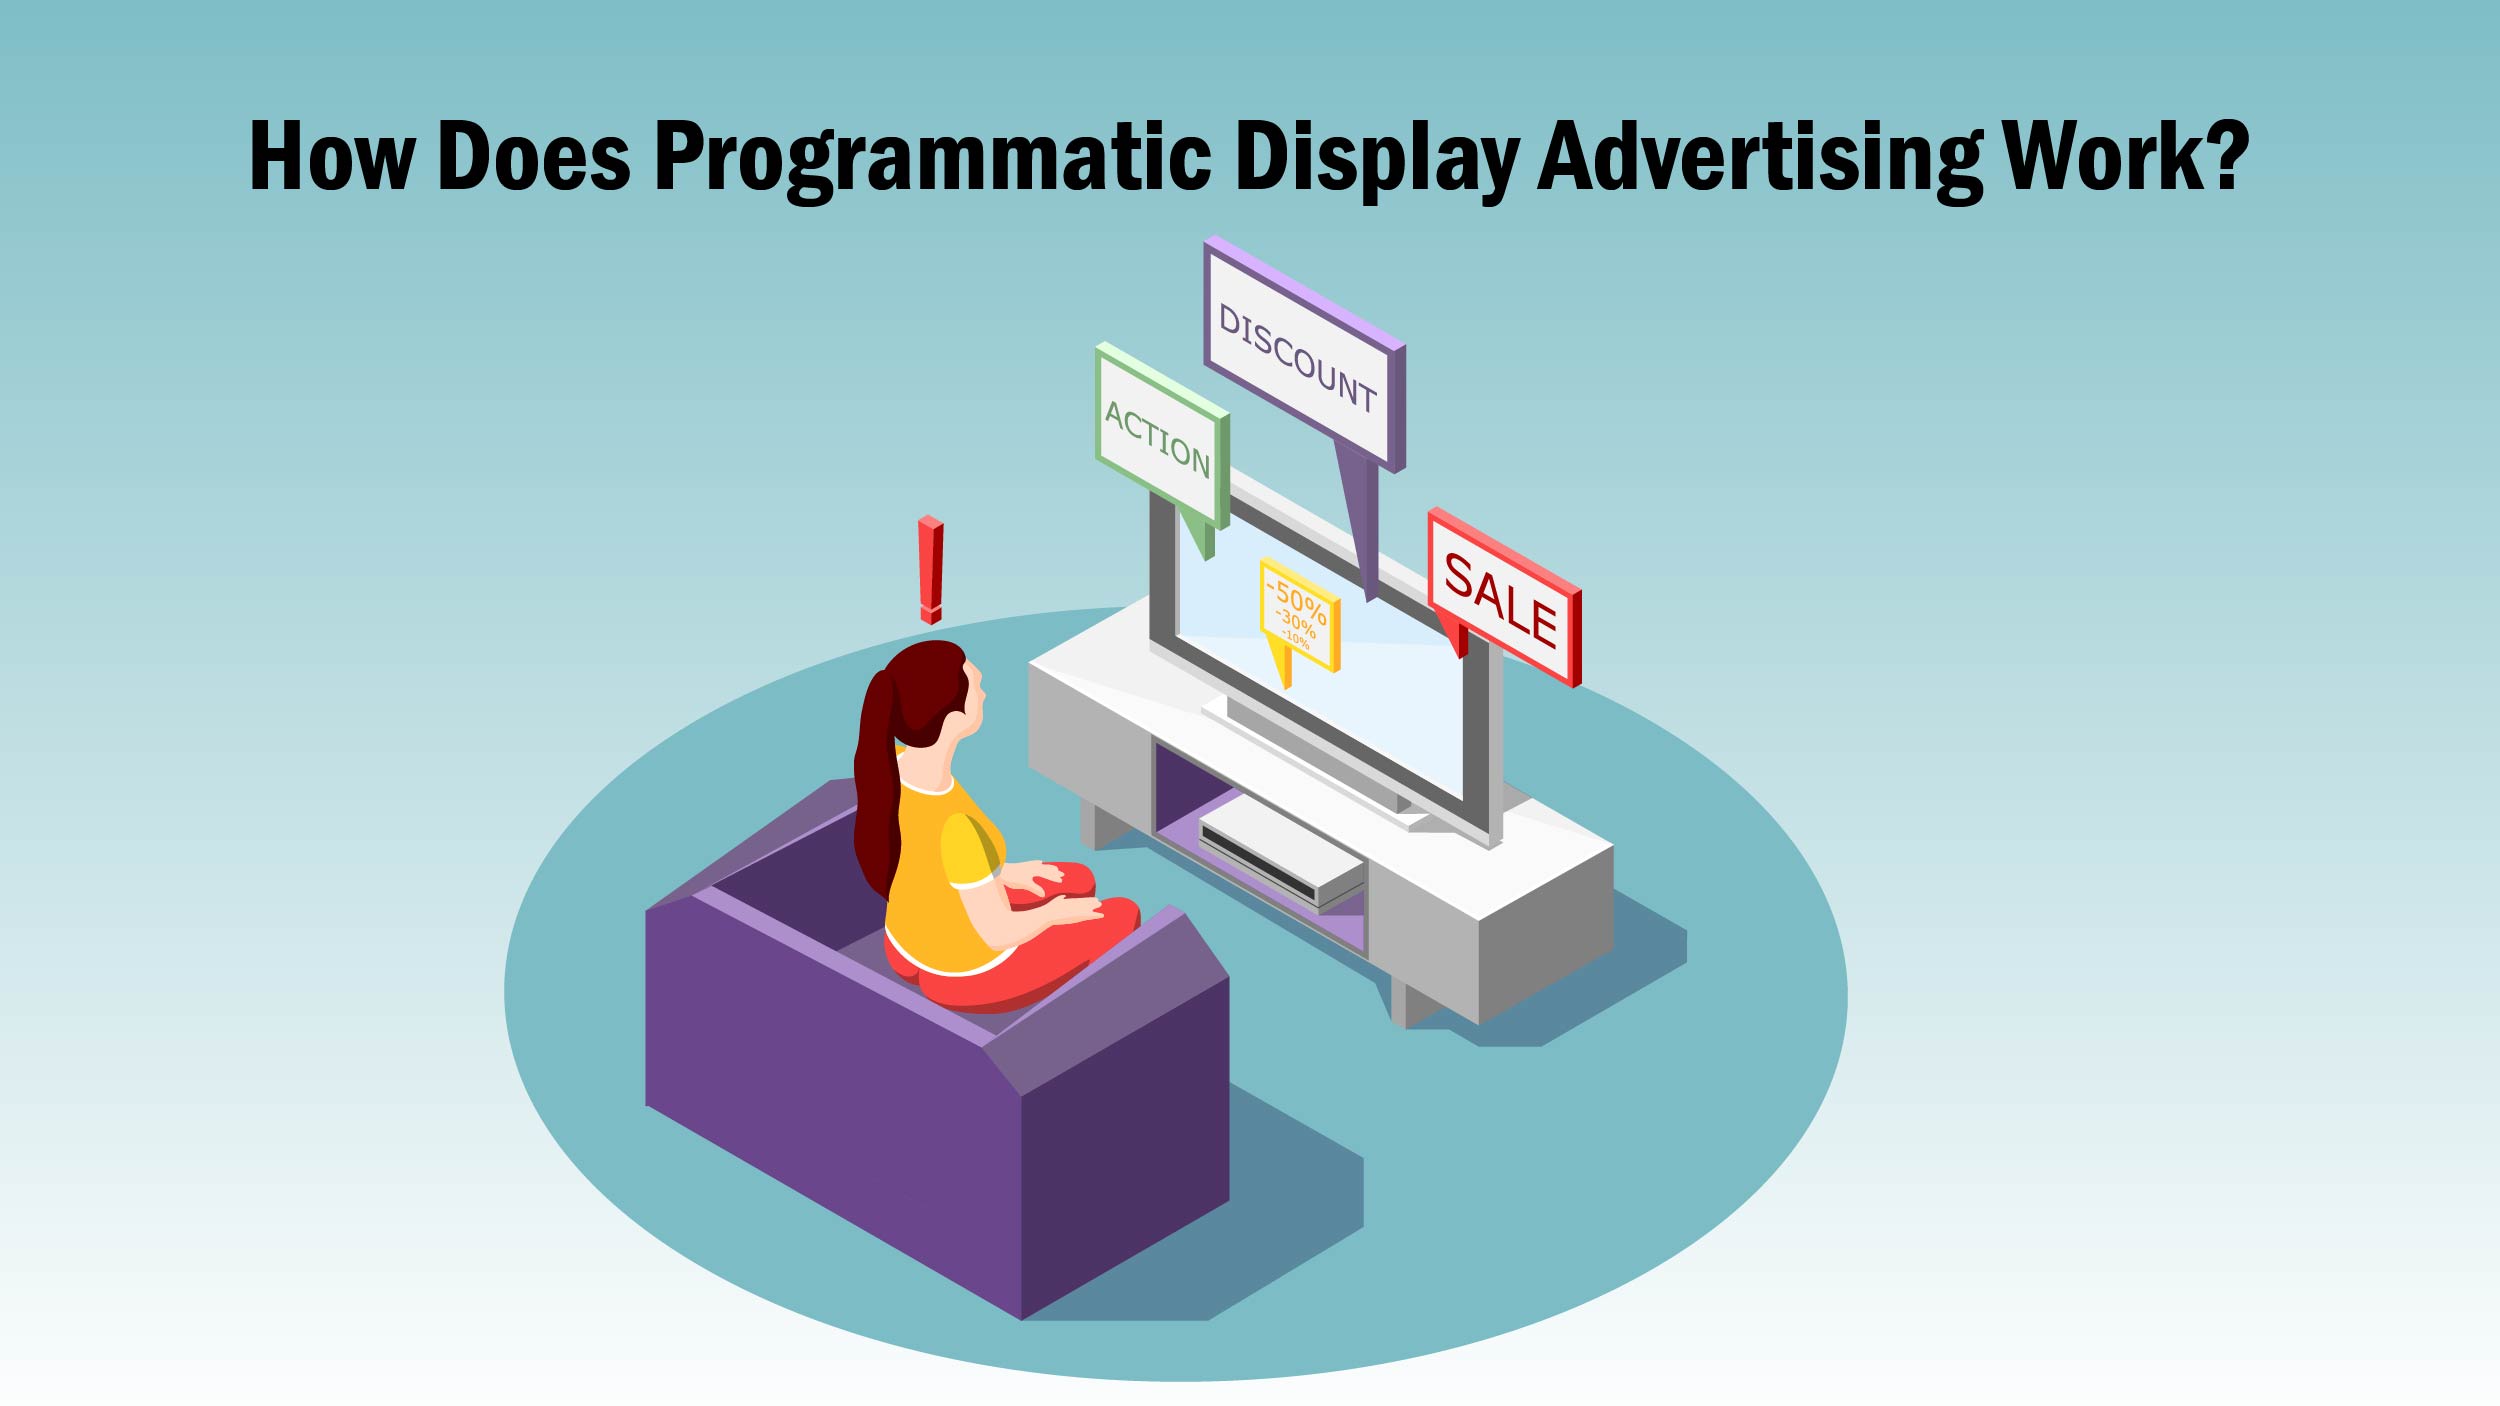 Programmatic Display Advertising